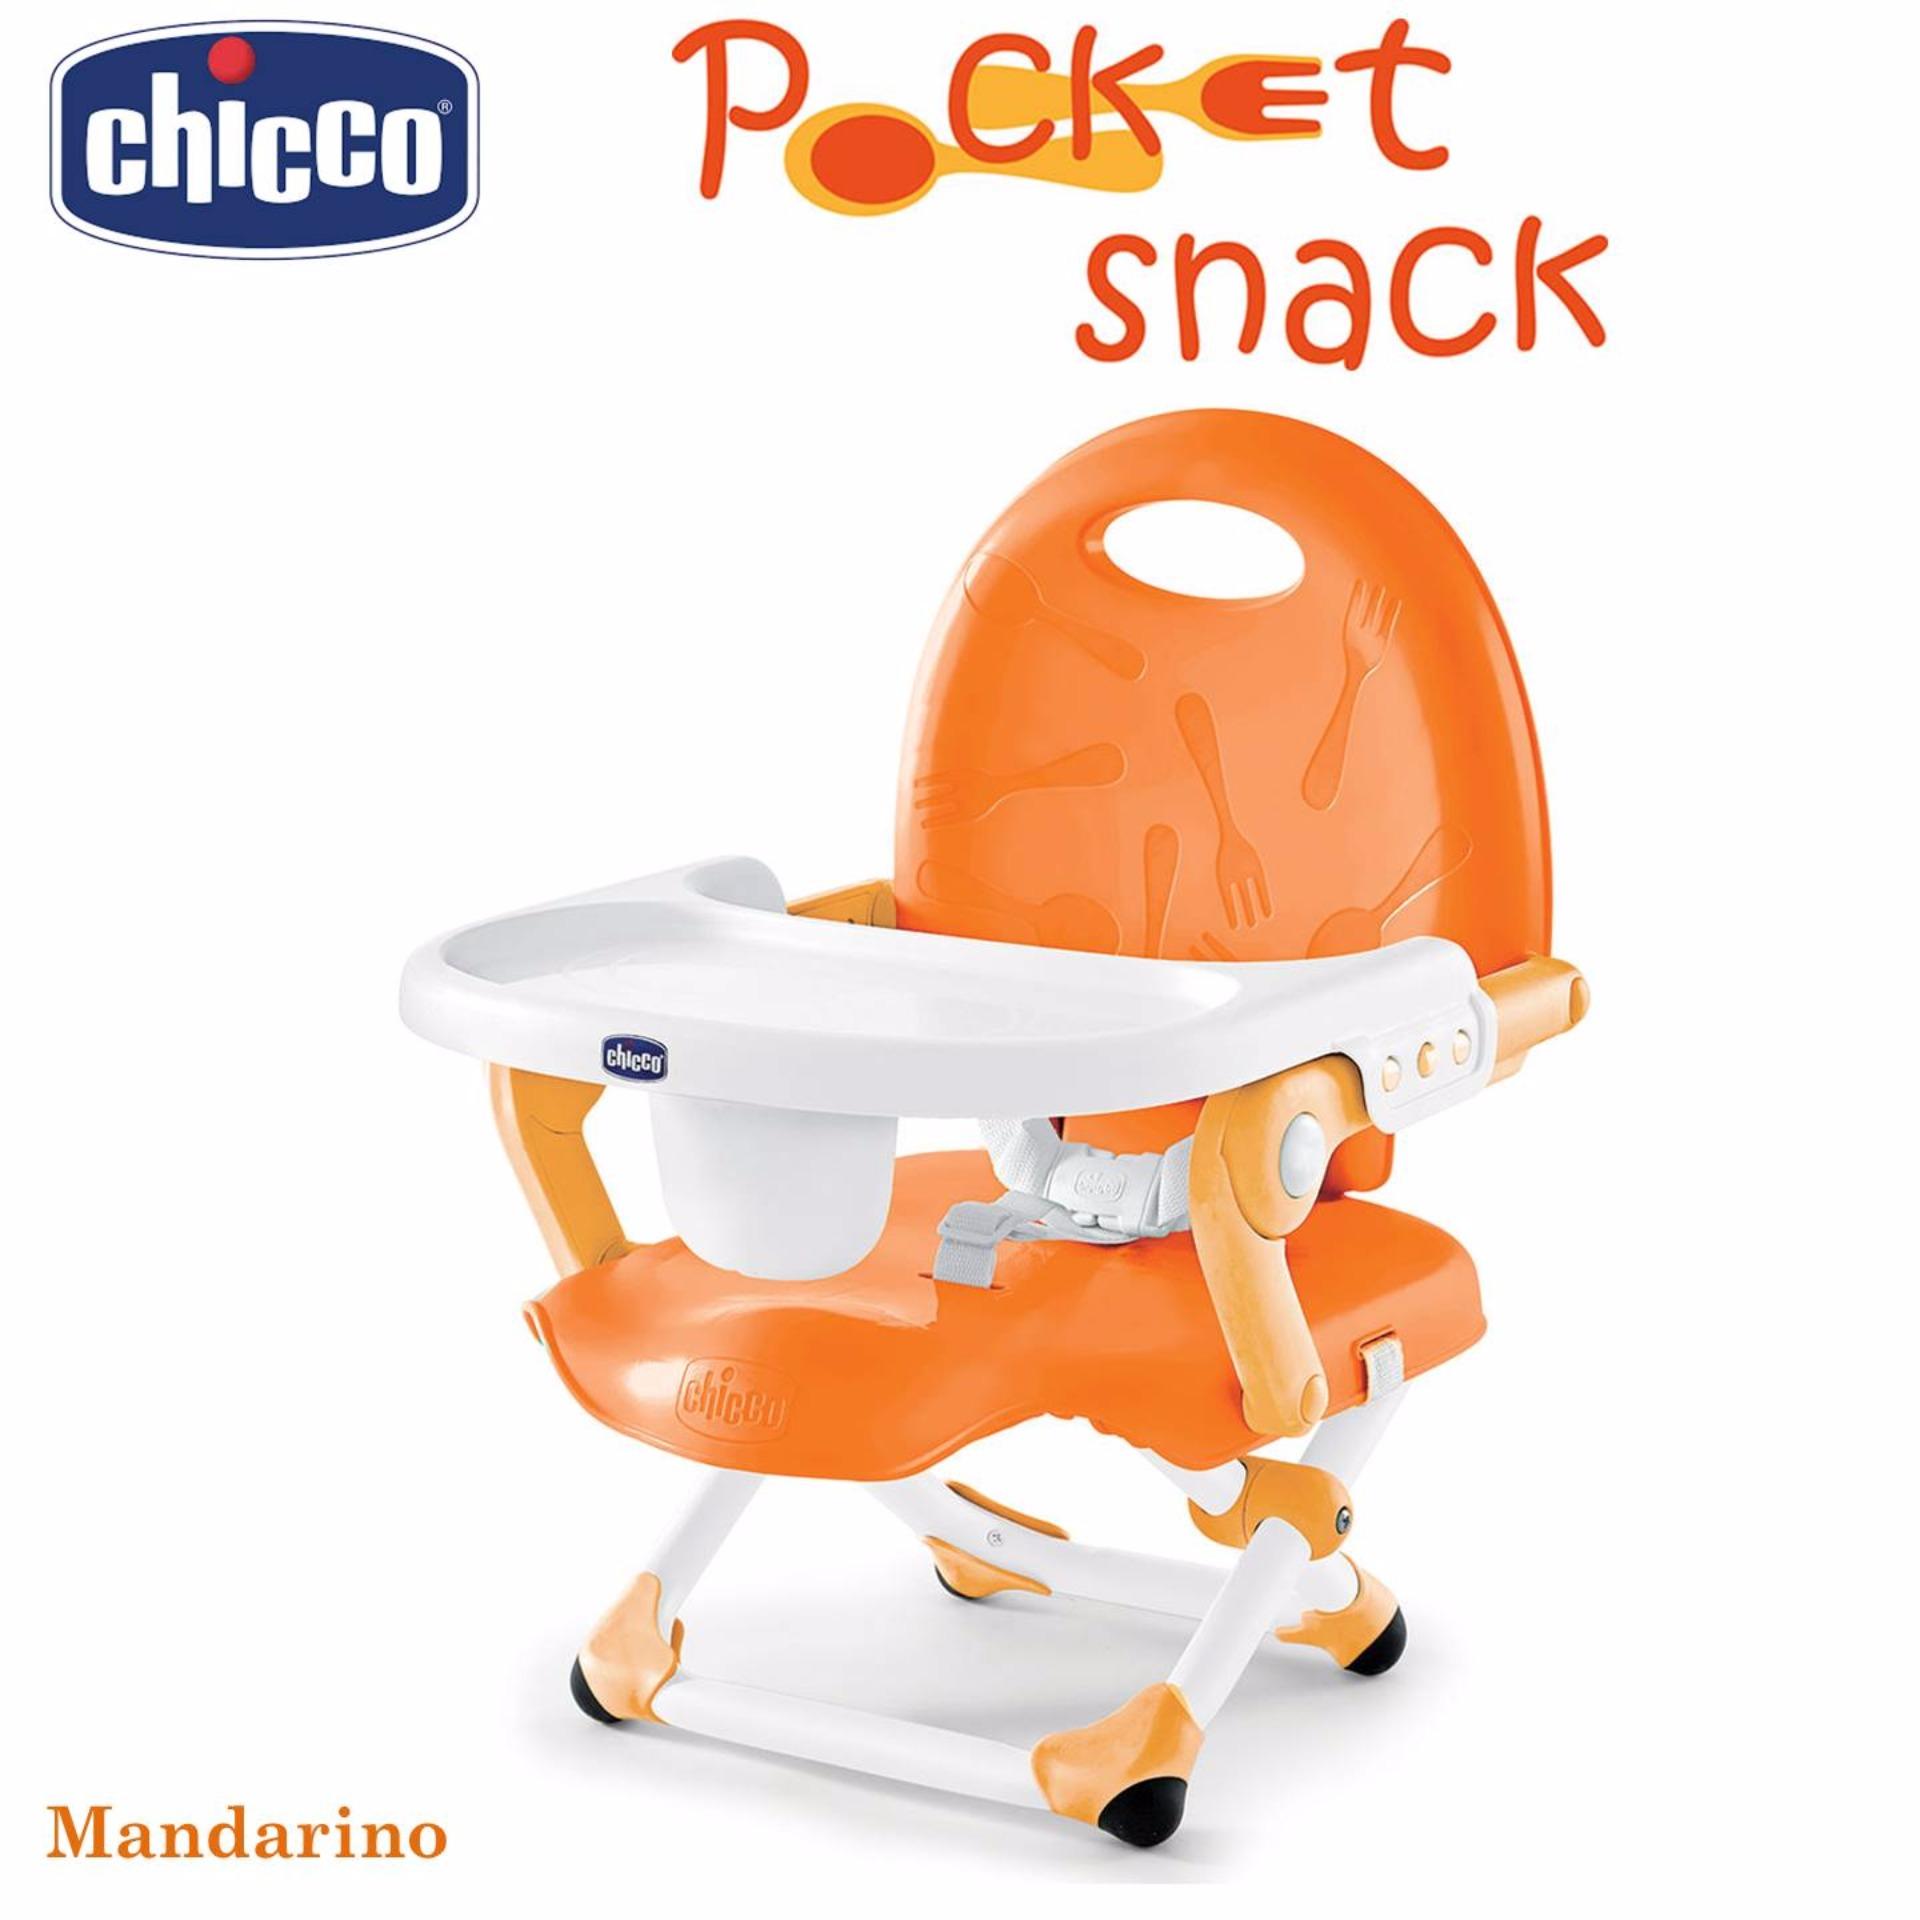 Chicco เก้าอีทานข้าวสำหรับเด็ก Pocket Snack Booster Seat - Mandarino